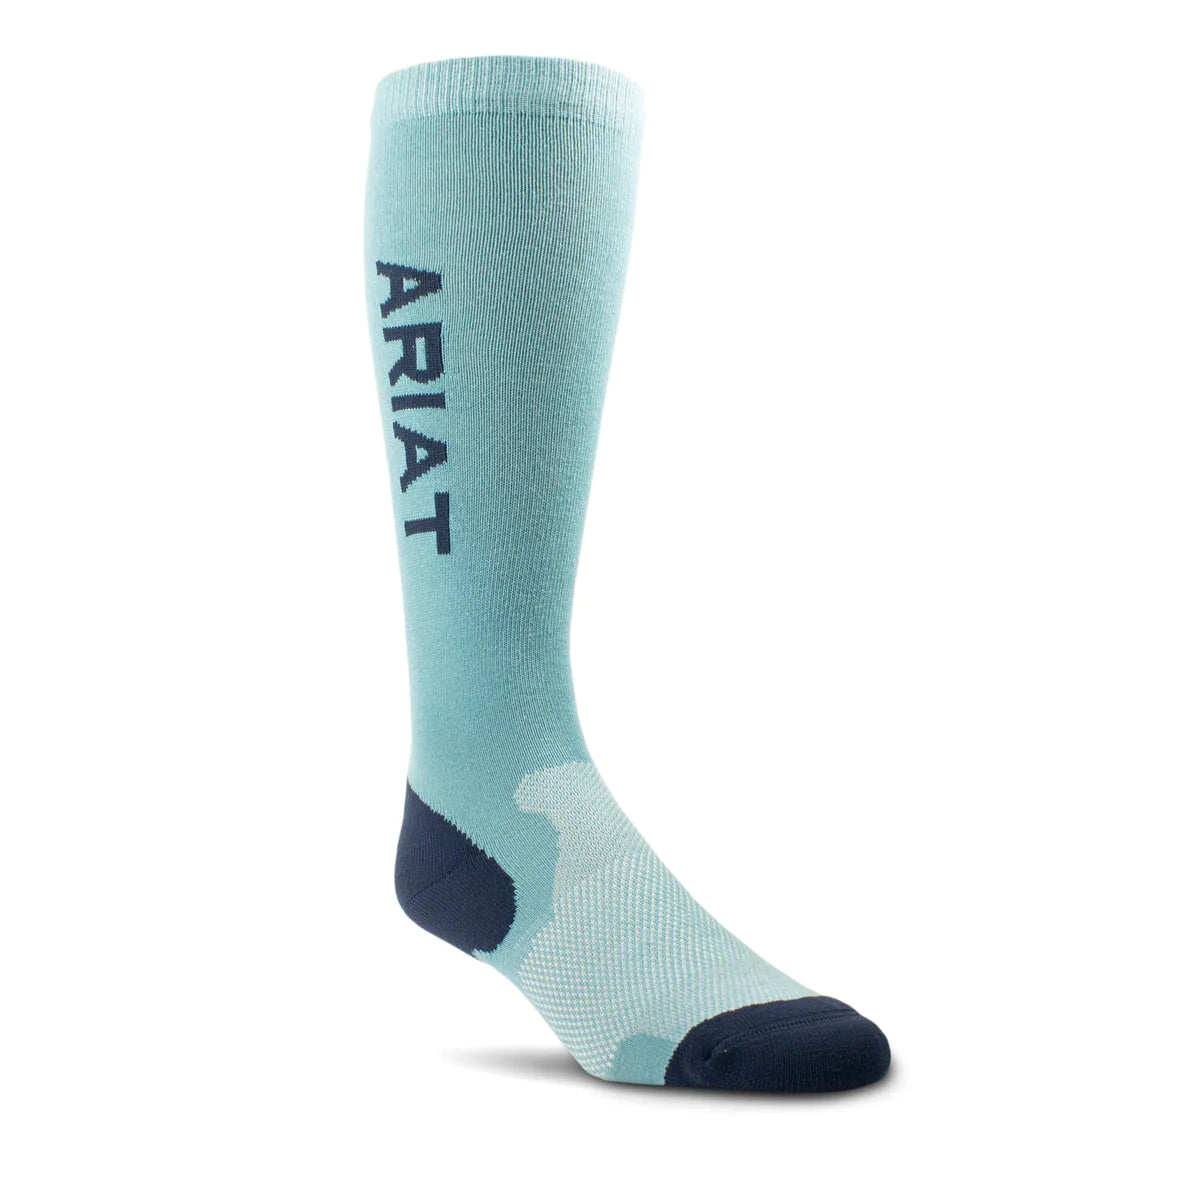 AriaTek Performance Sock